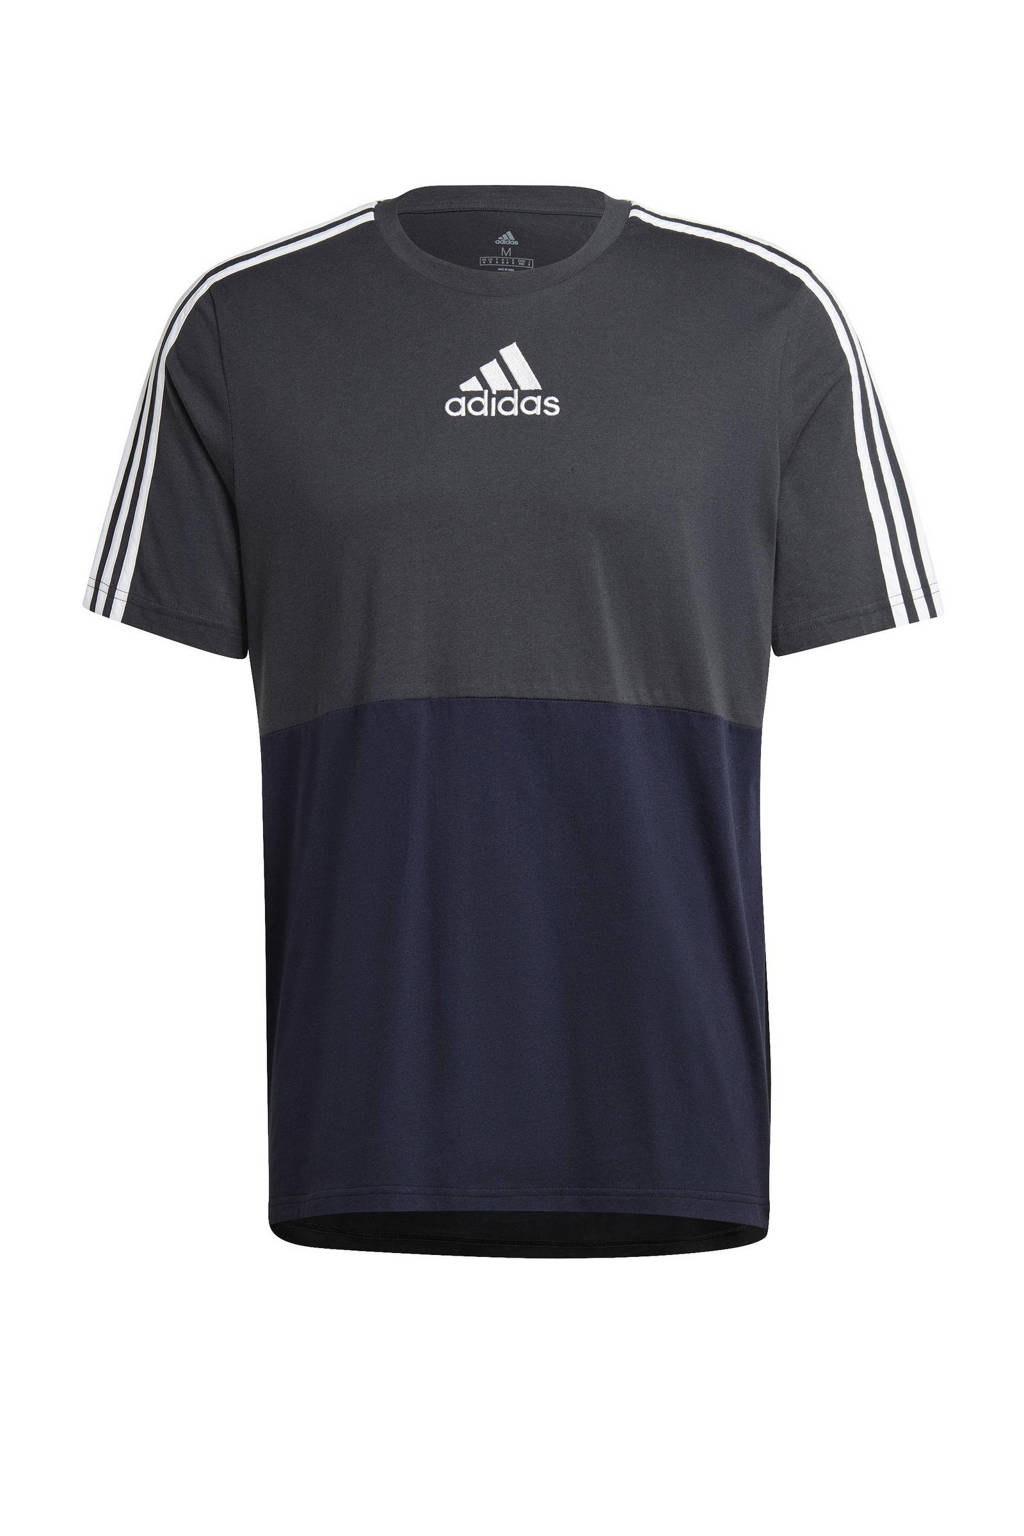 adidas Performance   sport T-shirt antraciet/donkerblauw/zwart